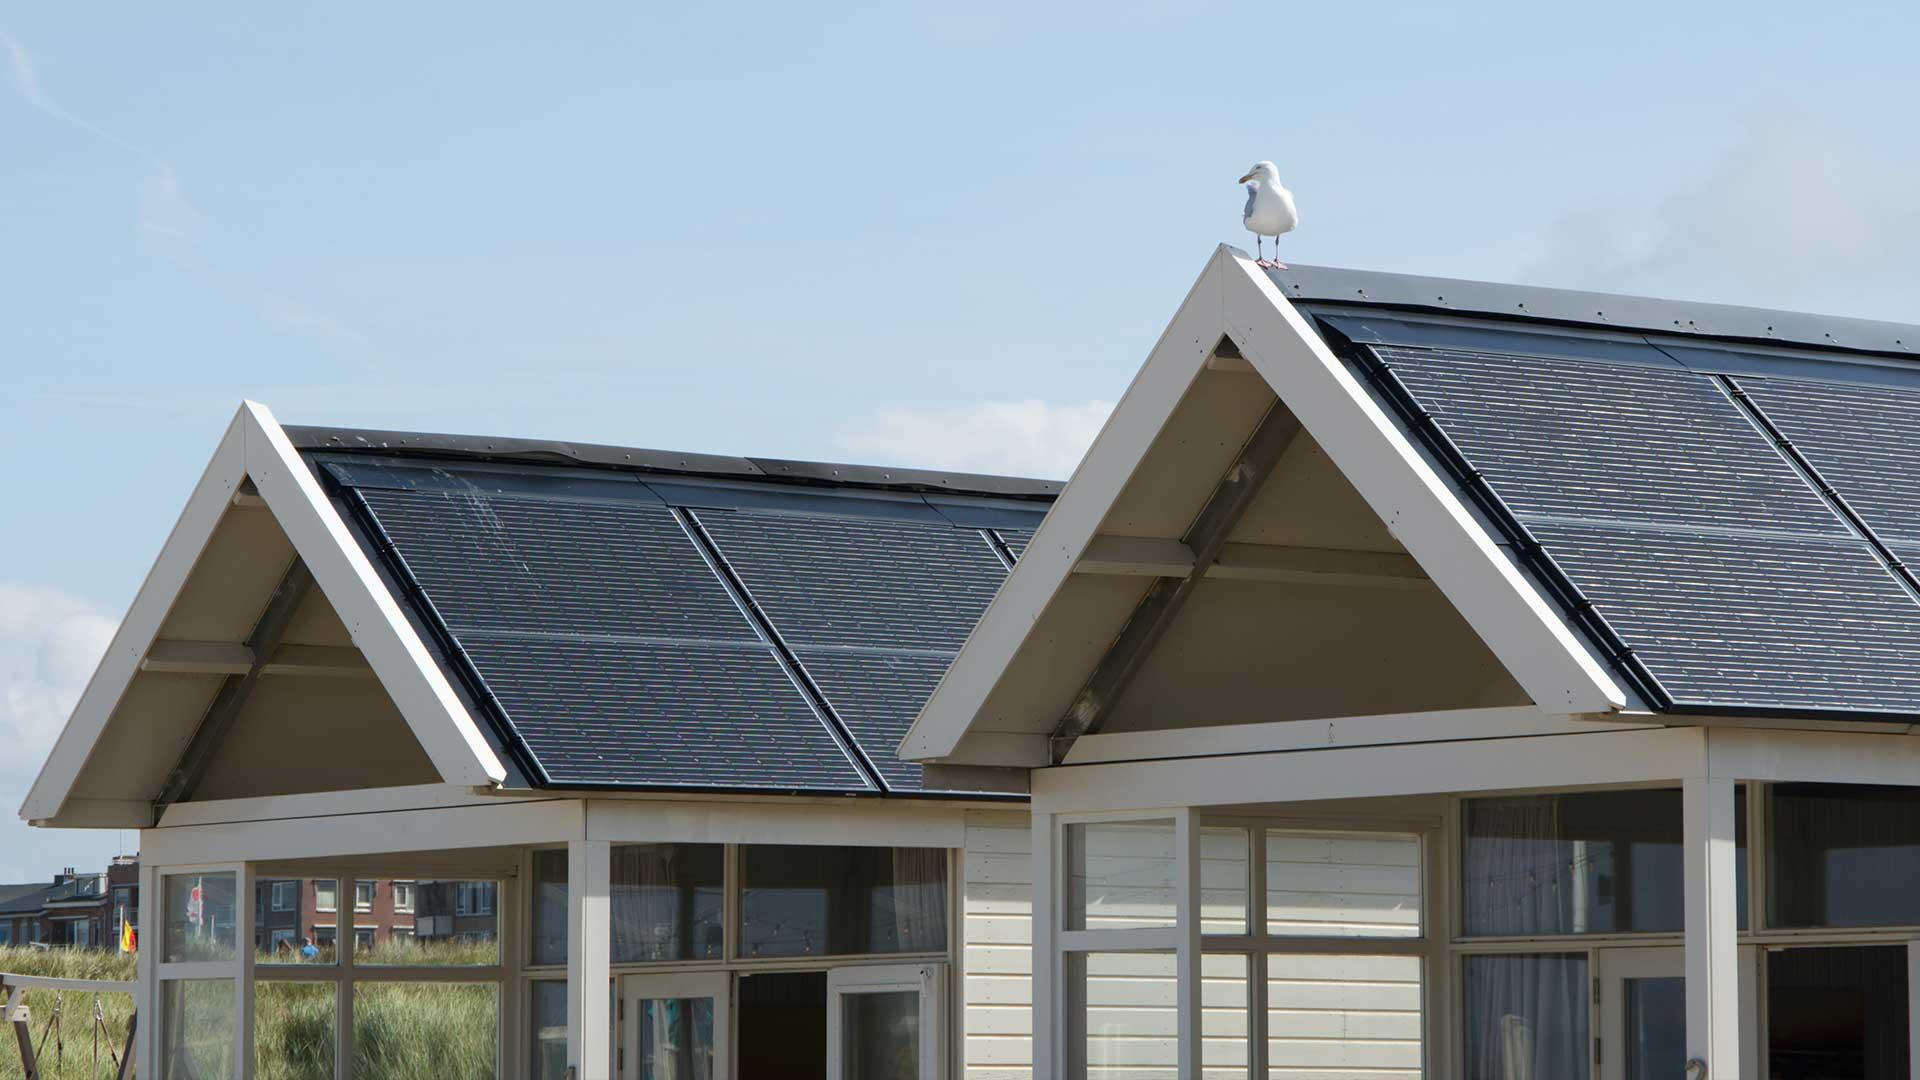 Solar panels / solar panel on two houses